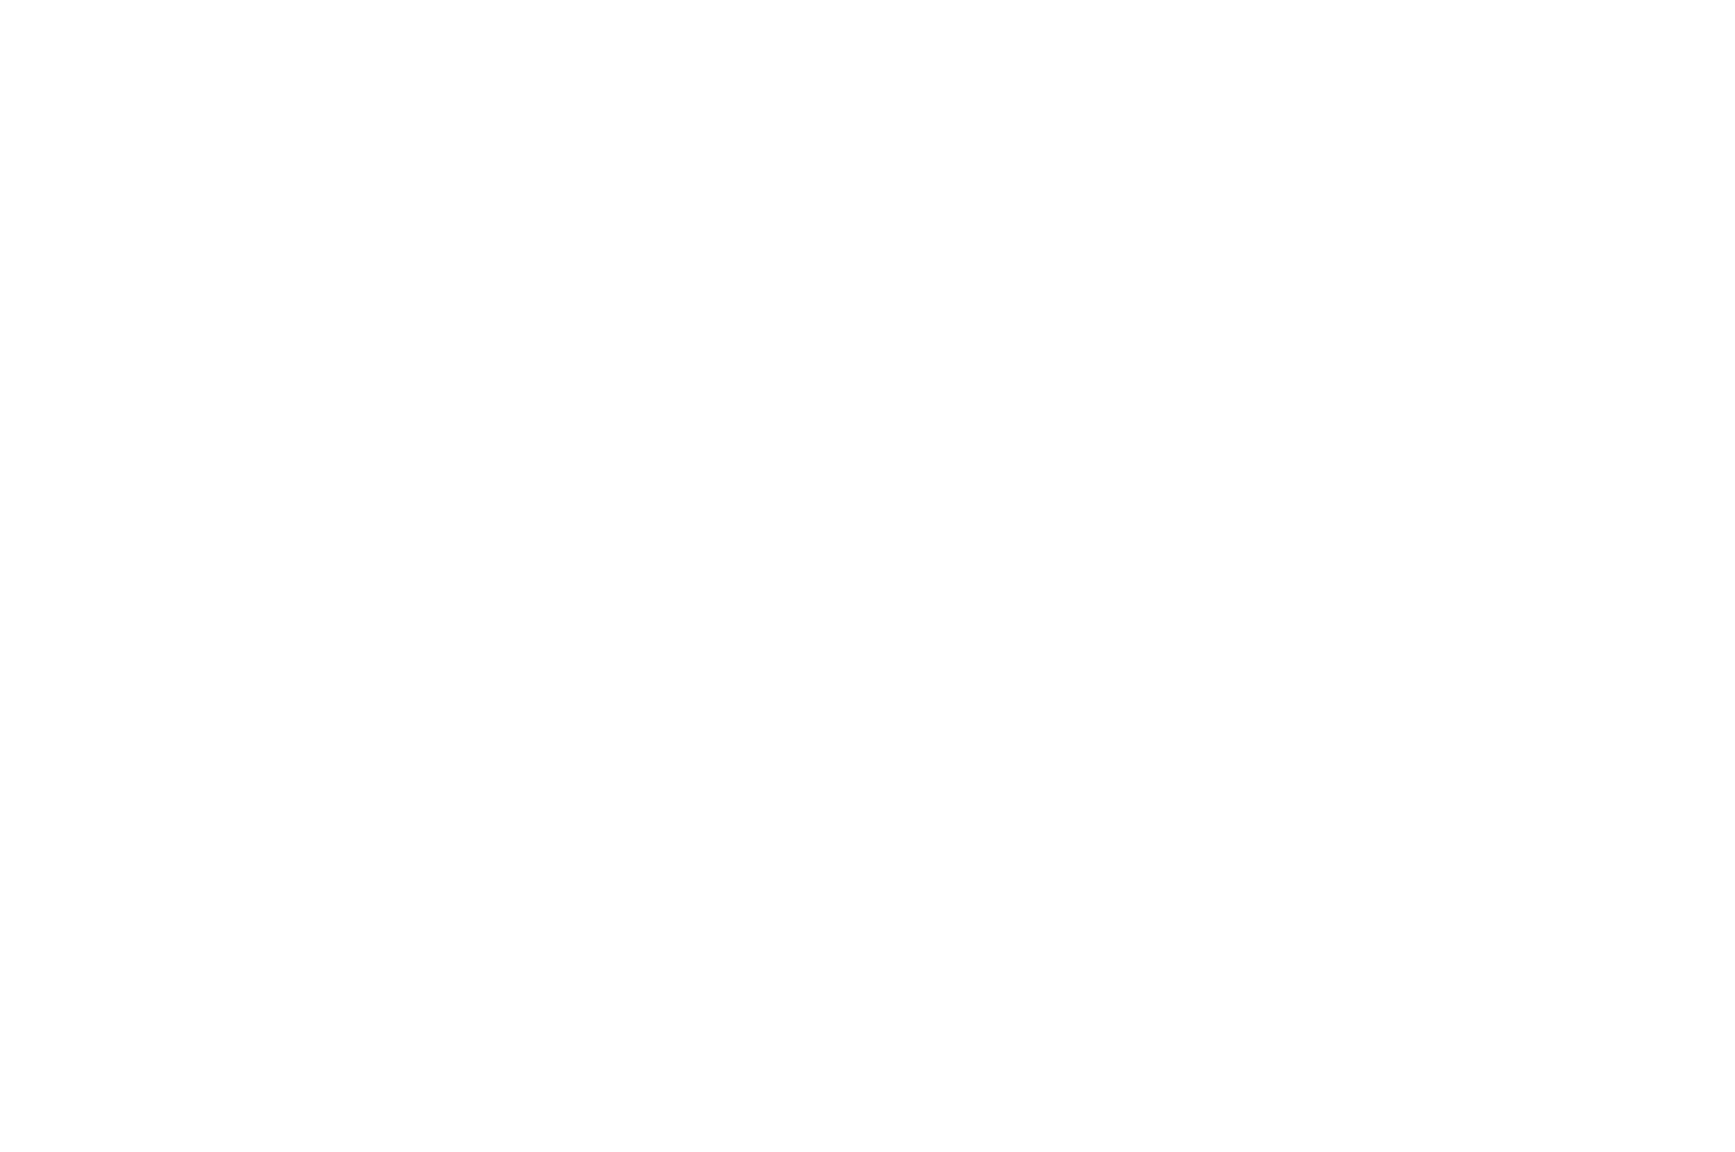 MUSIC VIDEO - Wine Women Film Festival - 2022